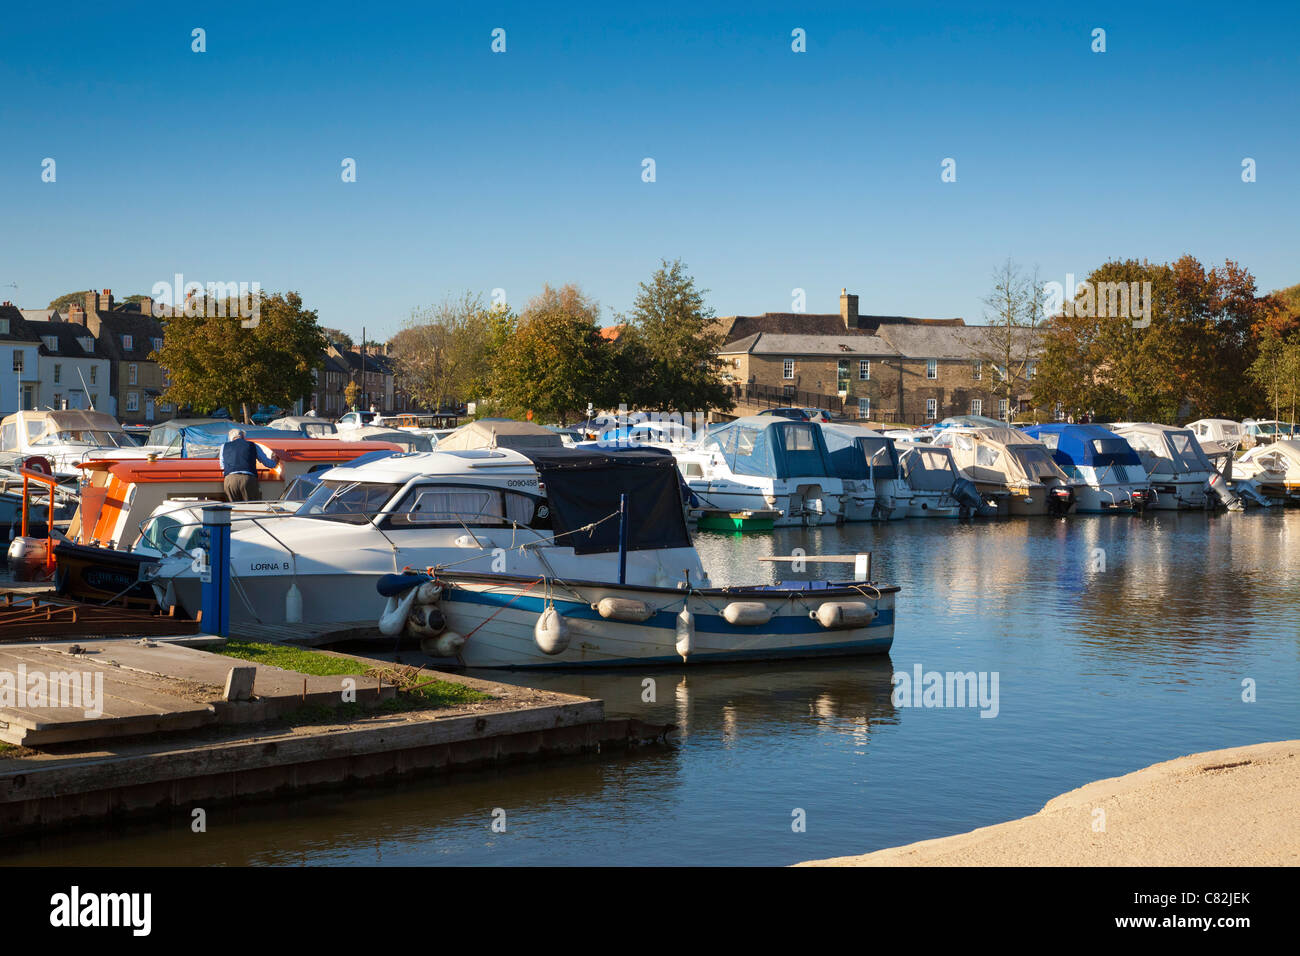 boatyard marina along the River ouse at Ely, Cambridgeshire UK Stock Photo